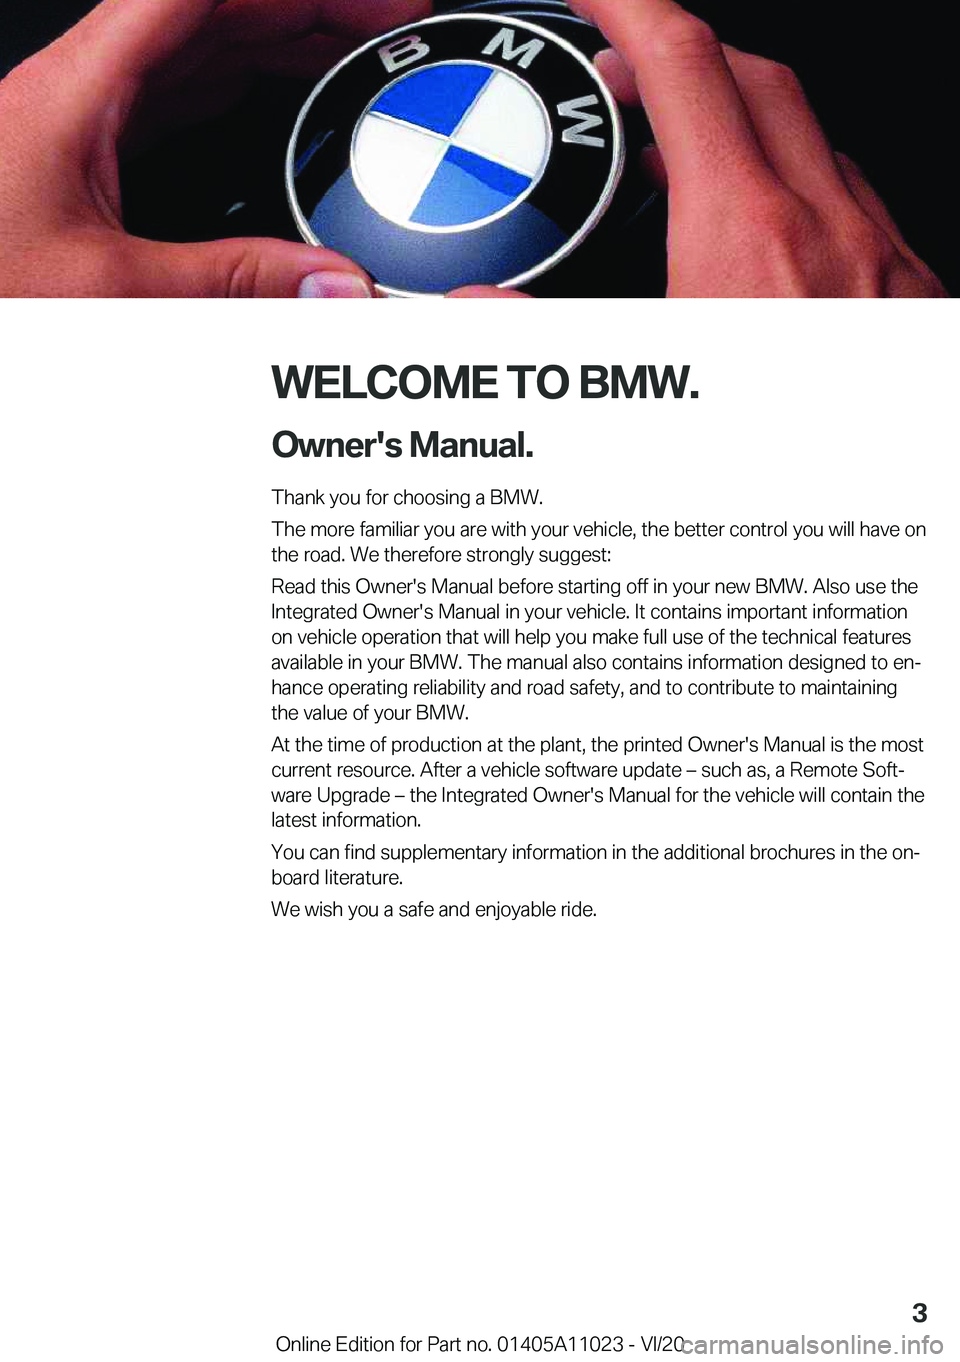 BMW X6 2021  Owners Manual �W�E�L�C�O�M�E��T�O��B�M�W�.�O�w�n�e�r�'�s��M�a�n�u�a�l�.
�T�h�a�n�k��y�o�u��f�o�r��c�h�o�o�s�i�n�g��a��B�M�W�.
�T�h�e��m�o�r�e��f�a�m�i�l�i�a�r��y�o�u��a�r�e��w�i�t�h��y�o�u�r��v�e